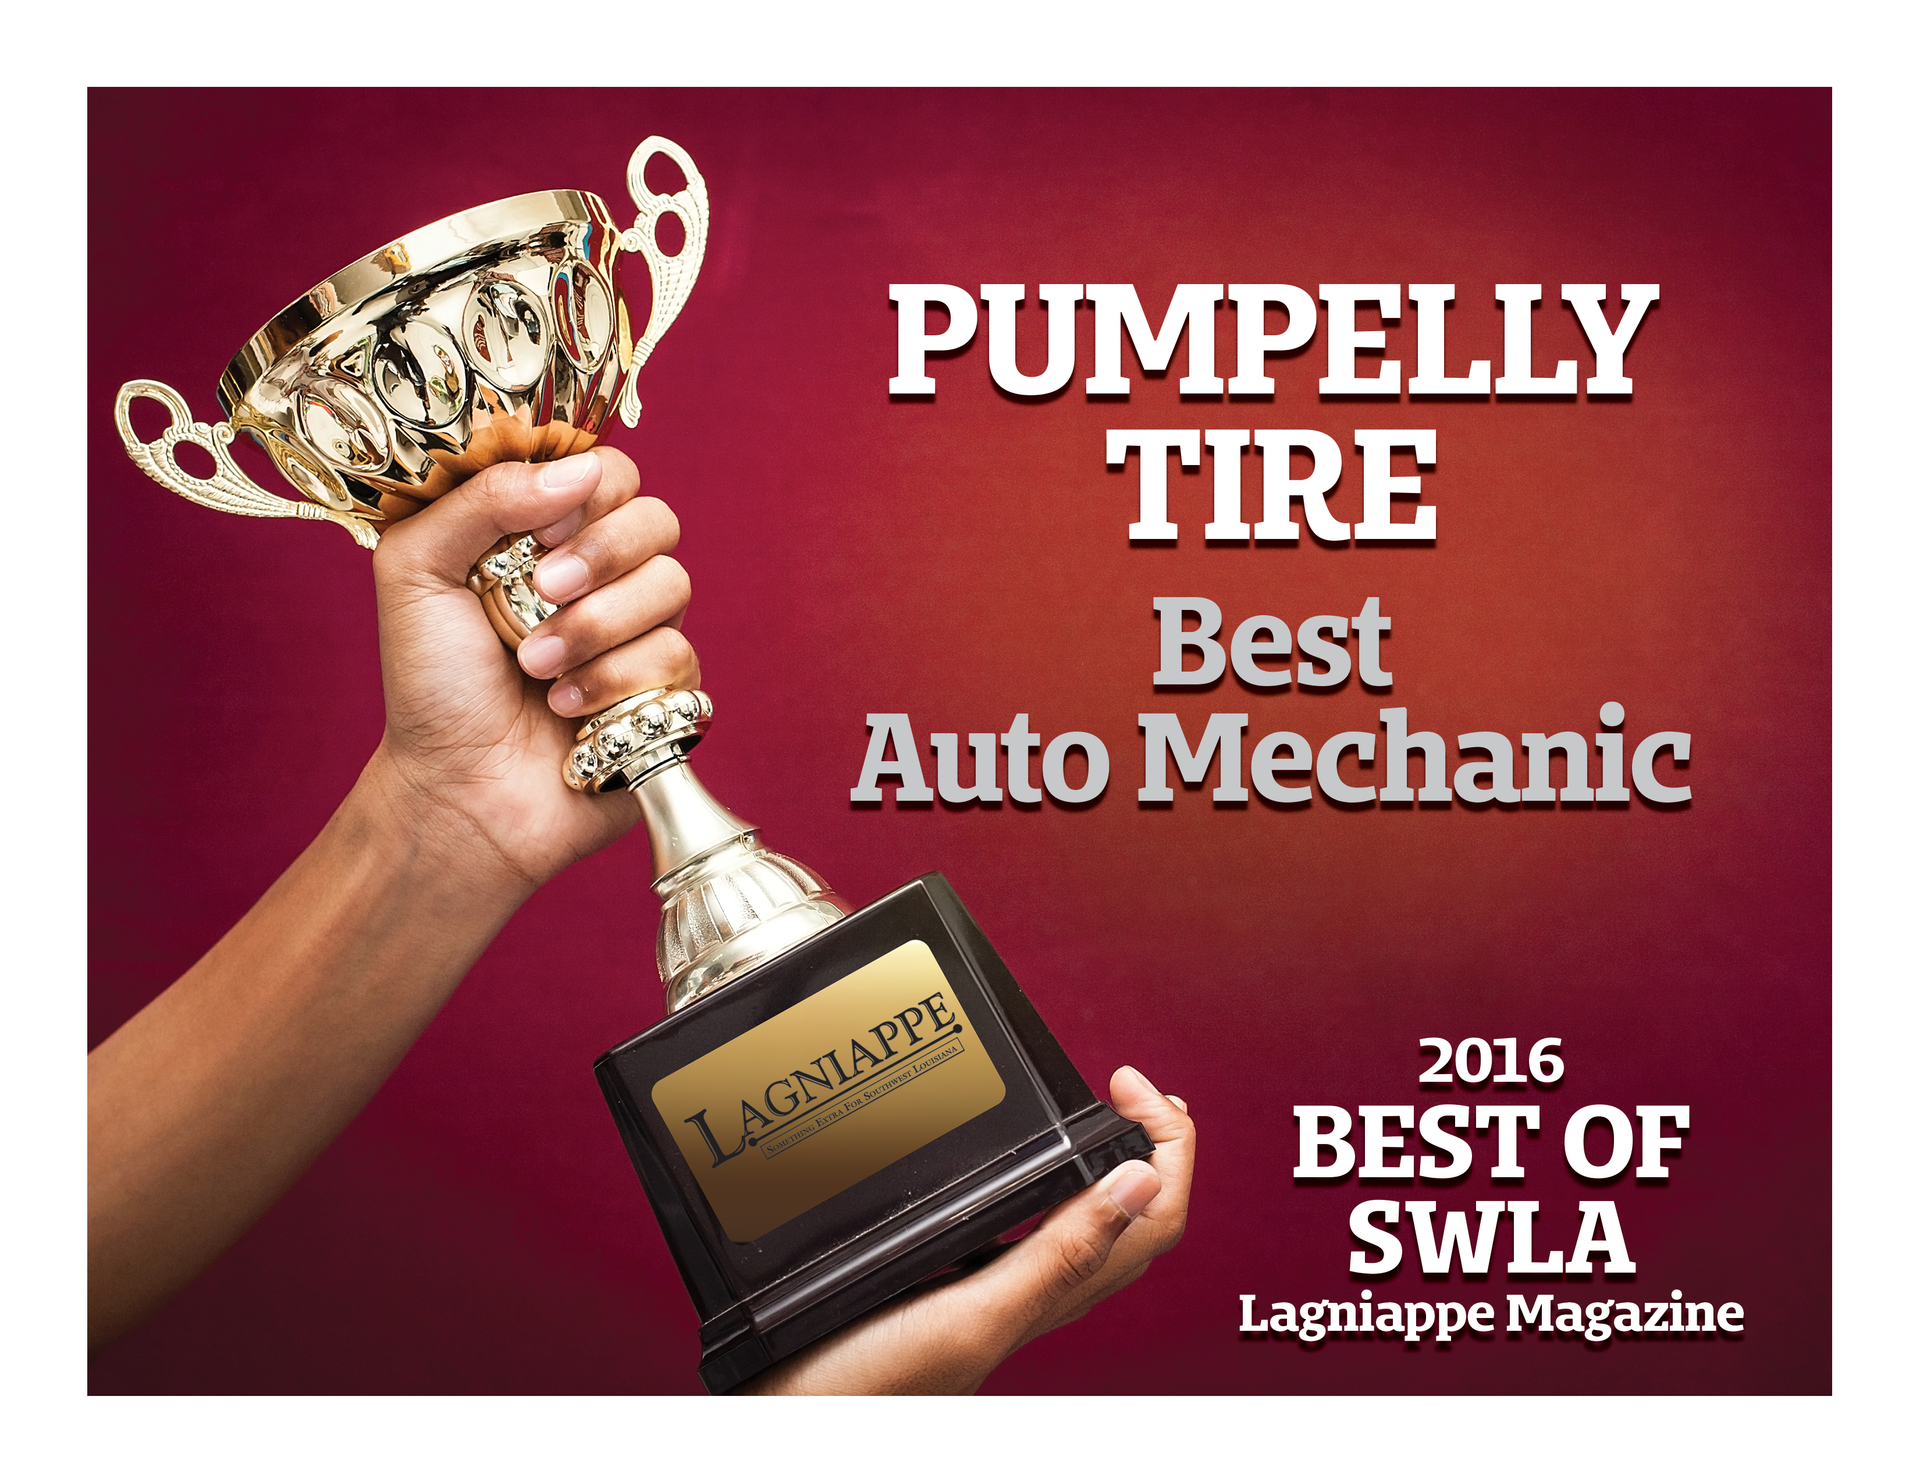 Best Auto Mechanic 2016